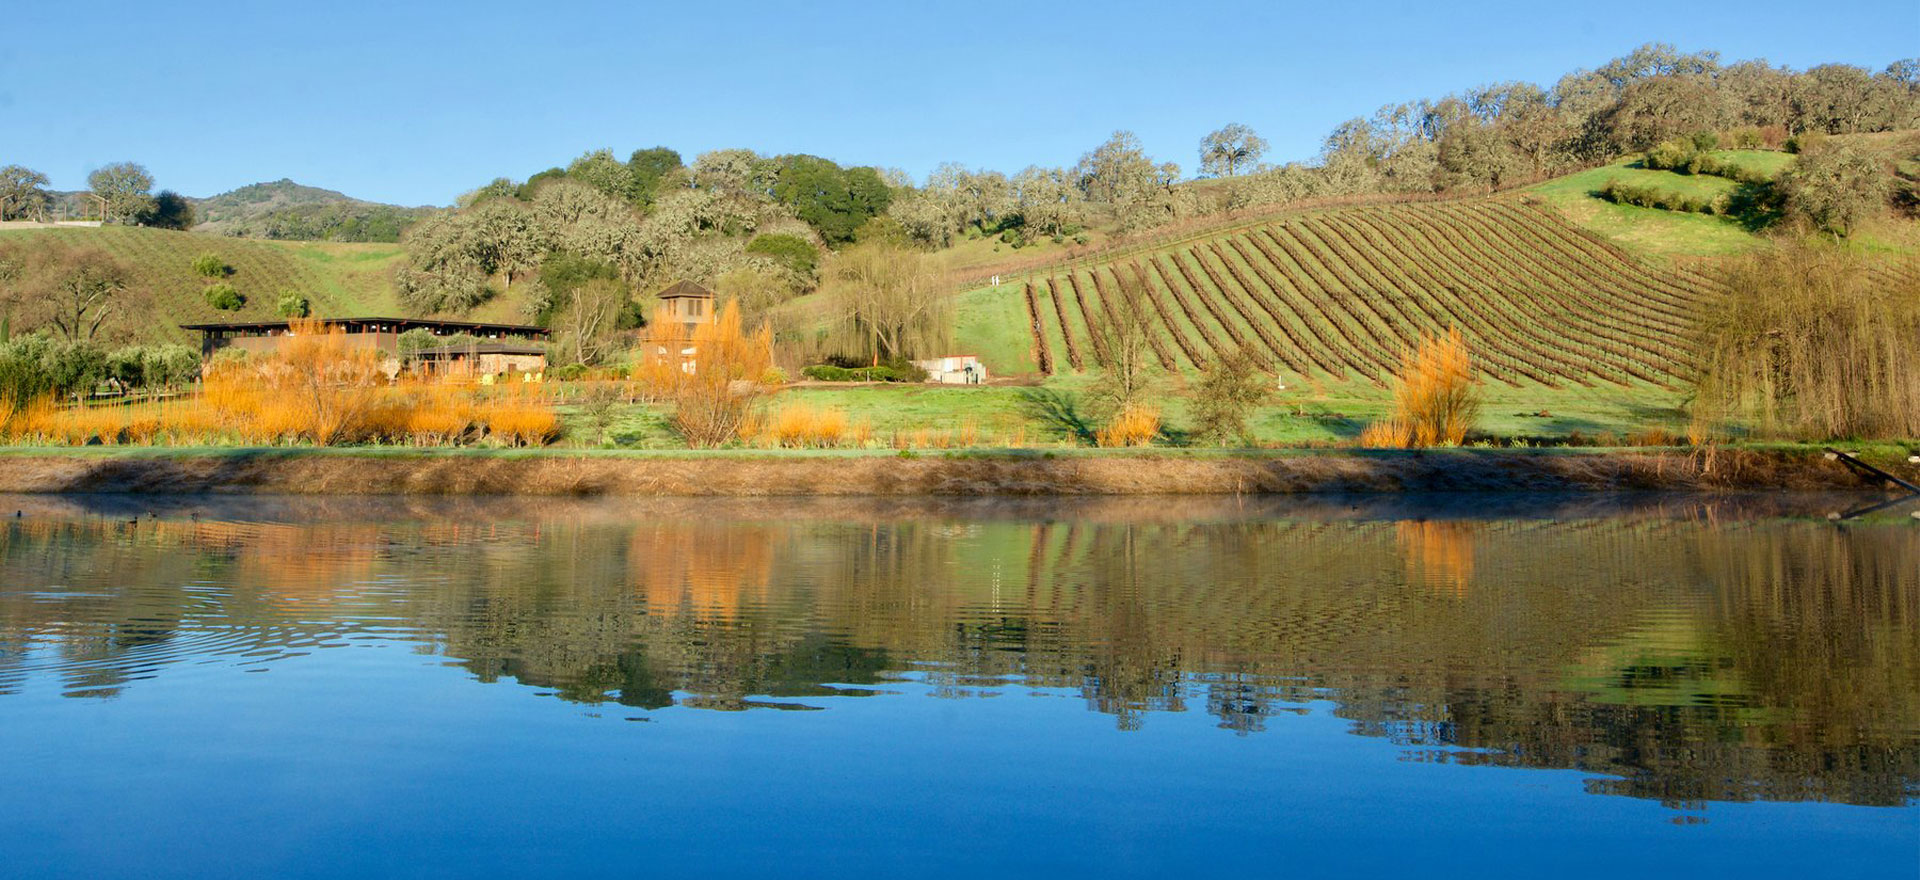 Saracina Vineyards – modern eco-friendly winery